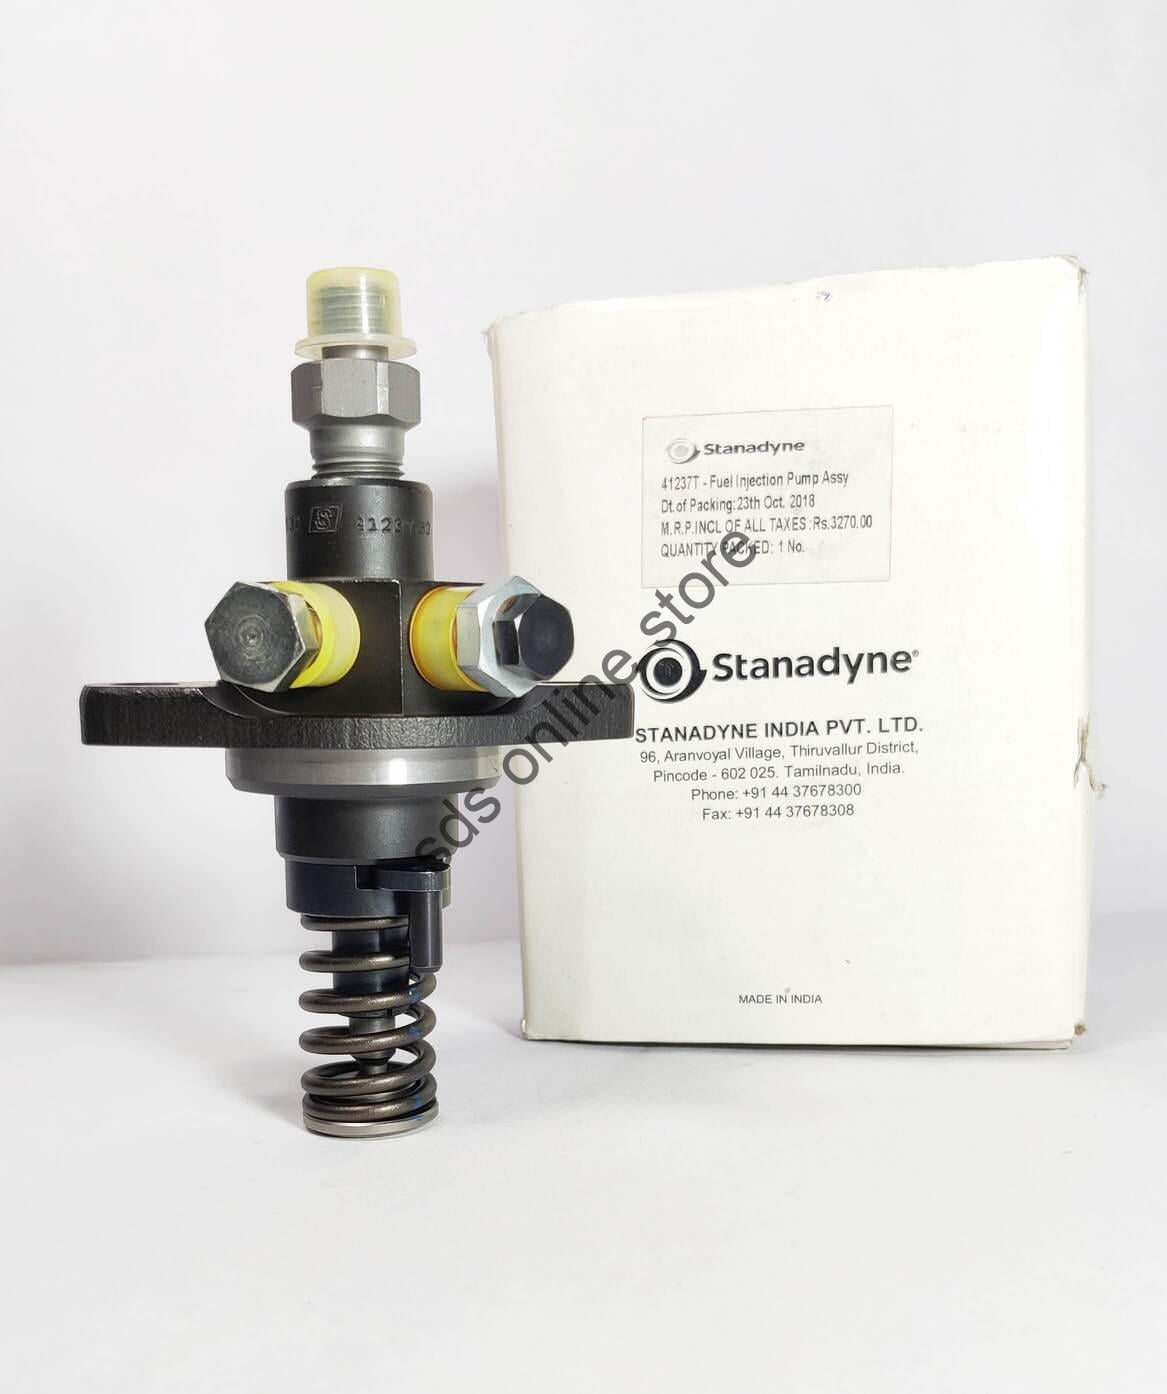 Stanadyne Fuel Injection Pump Assy 41237T Single Cylinder Pump (Chilli Pump)